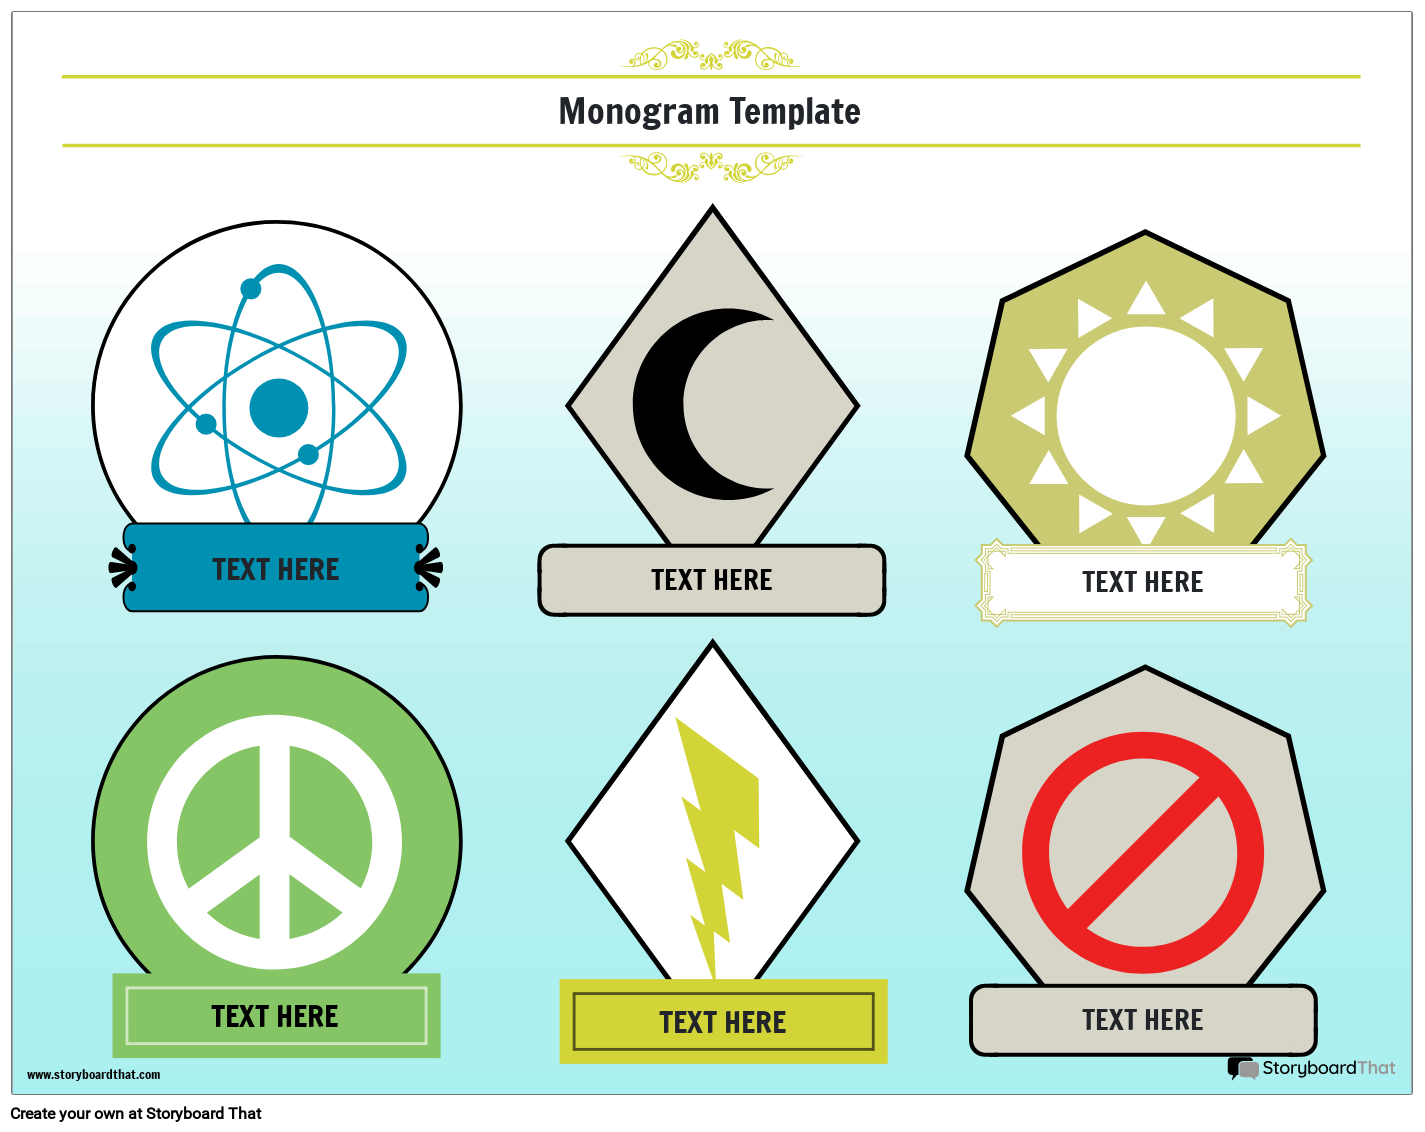 Colorful Symbols-Based Monogram Template